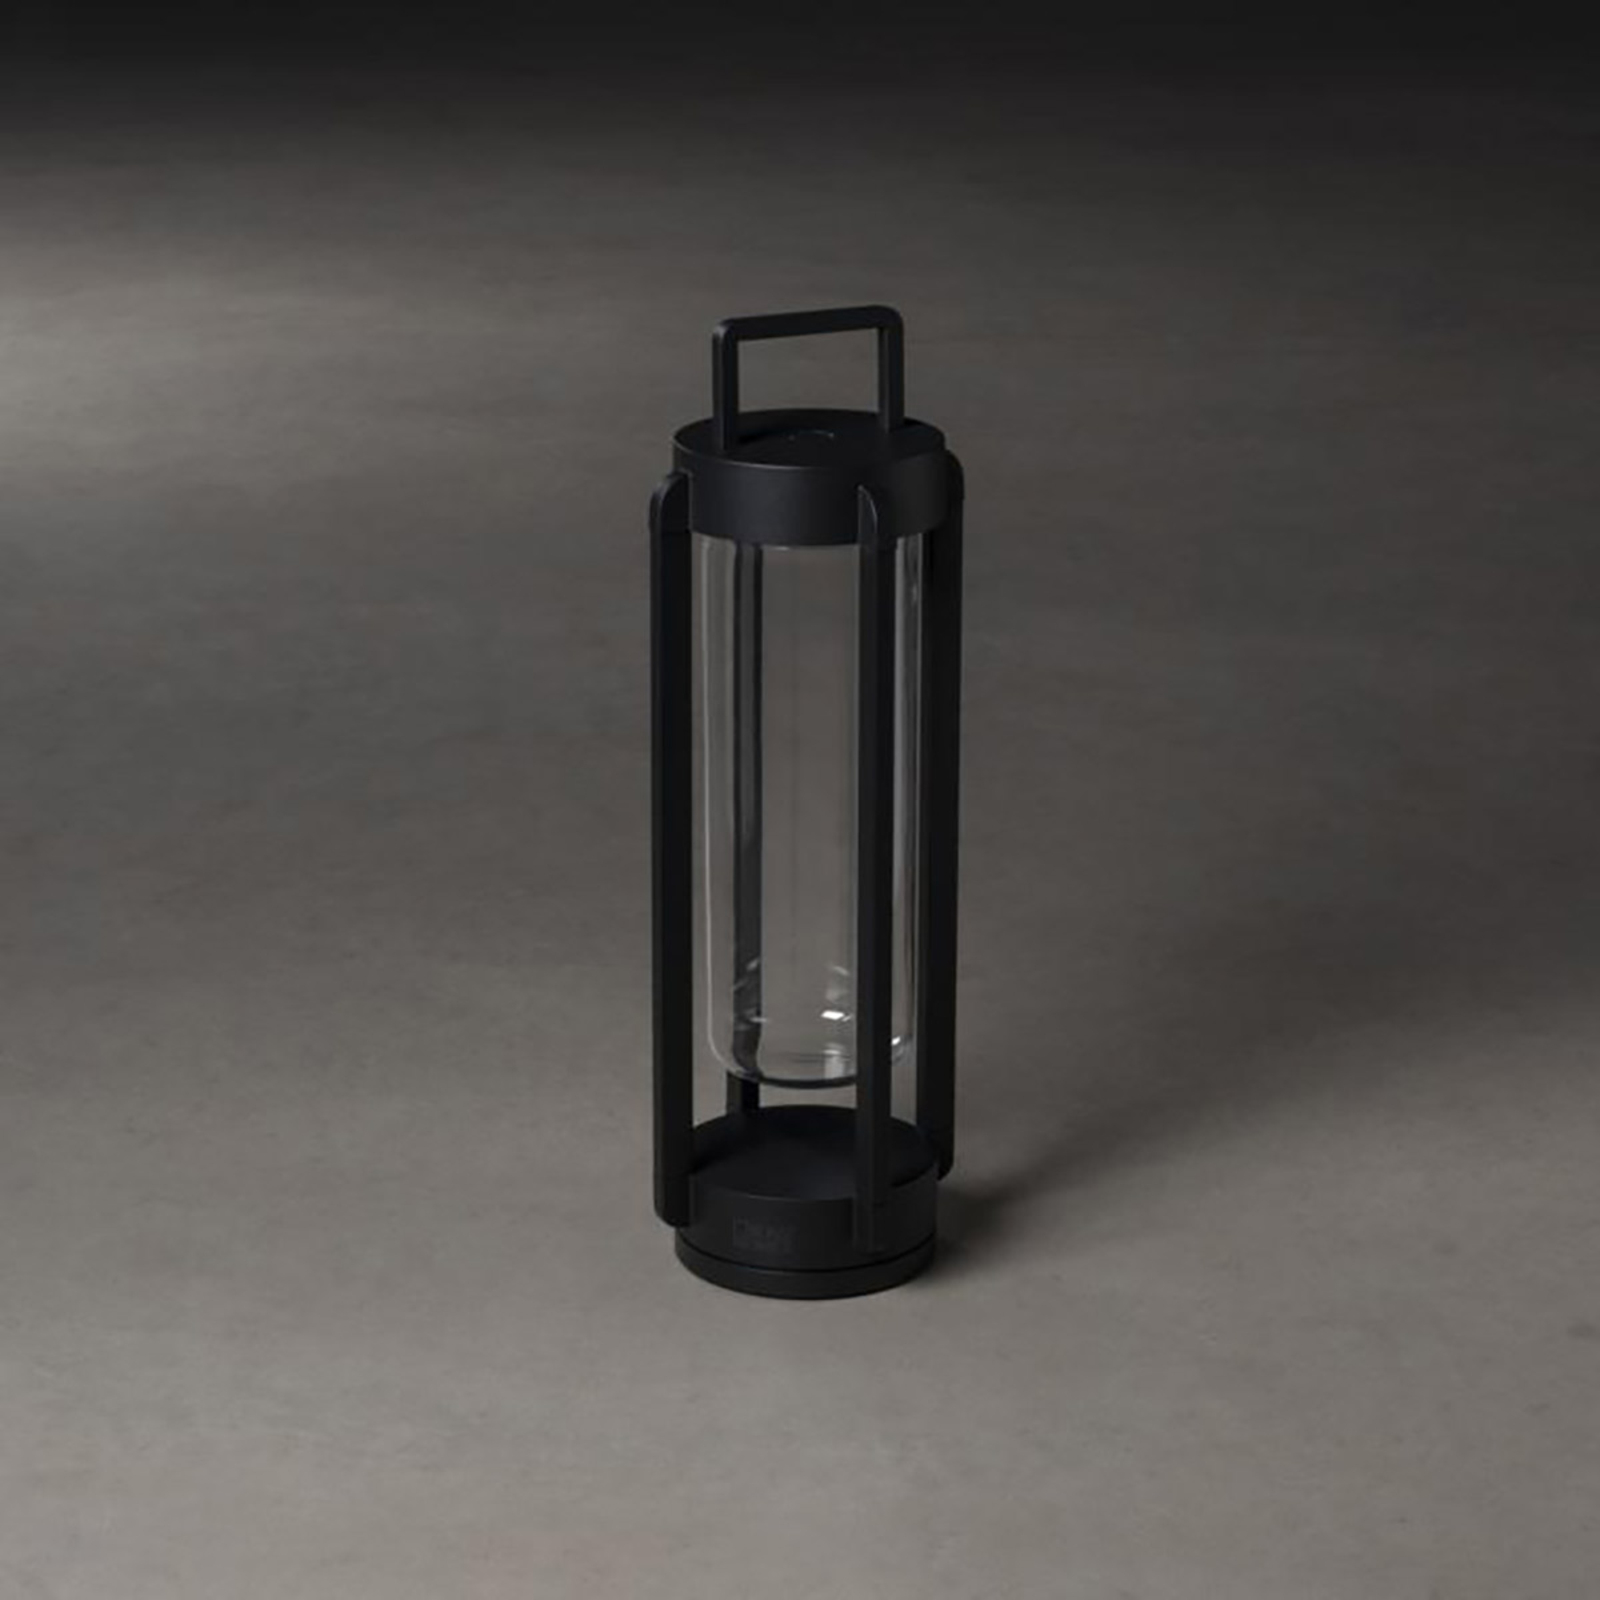 LED Otranto decorative lantern, dimmable, USB